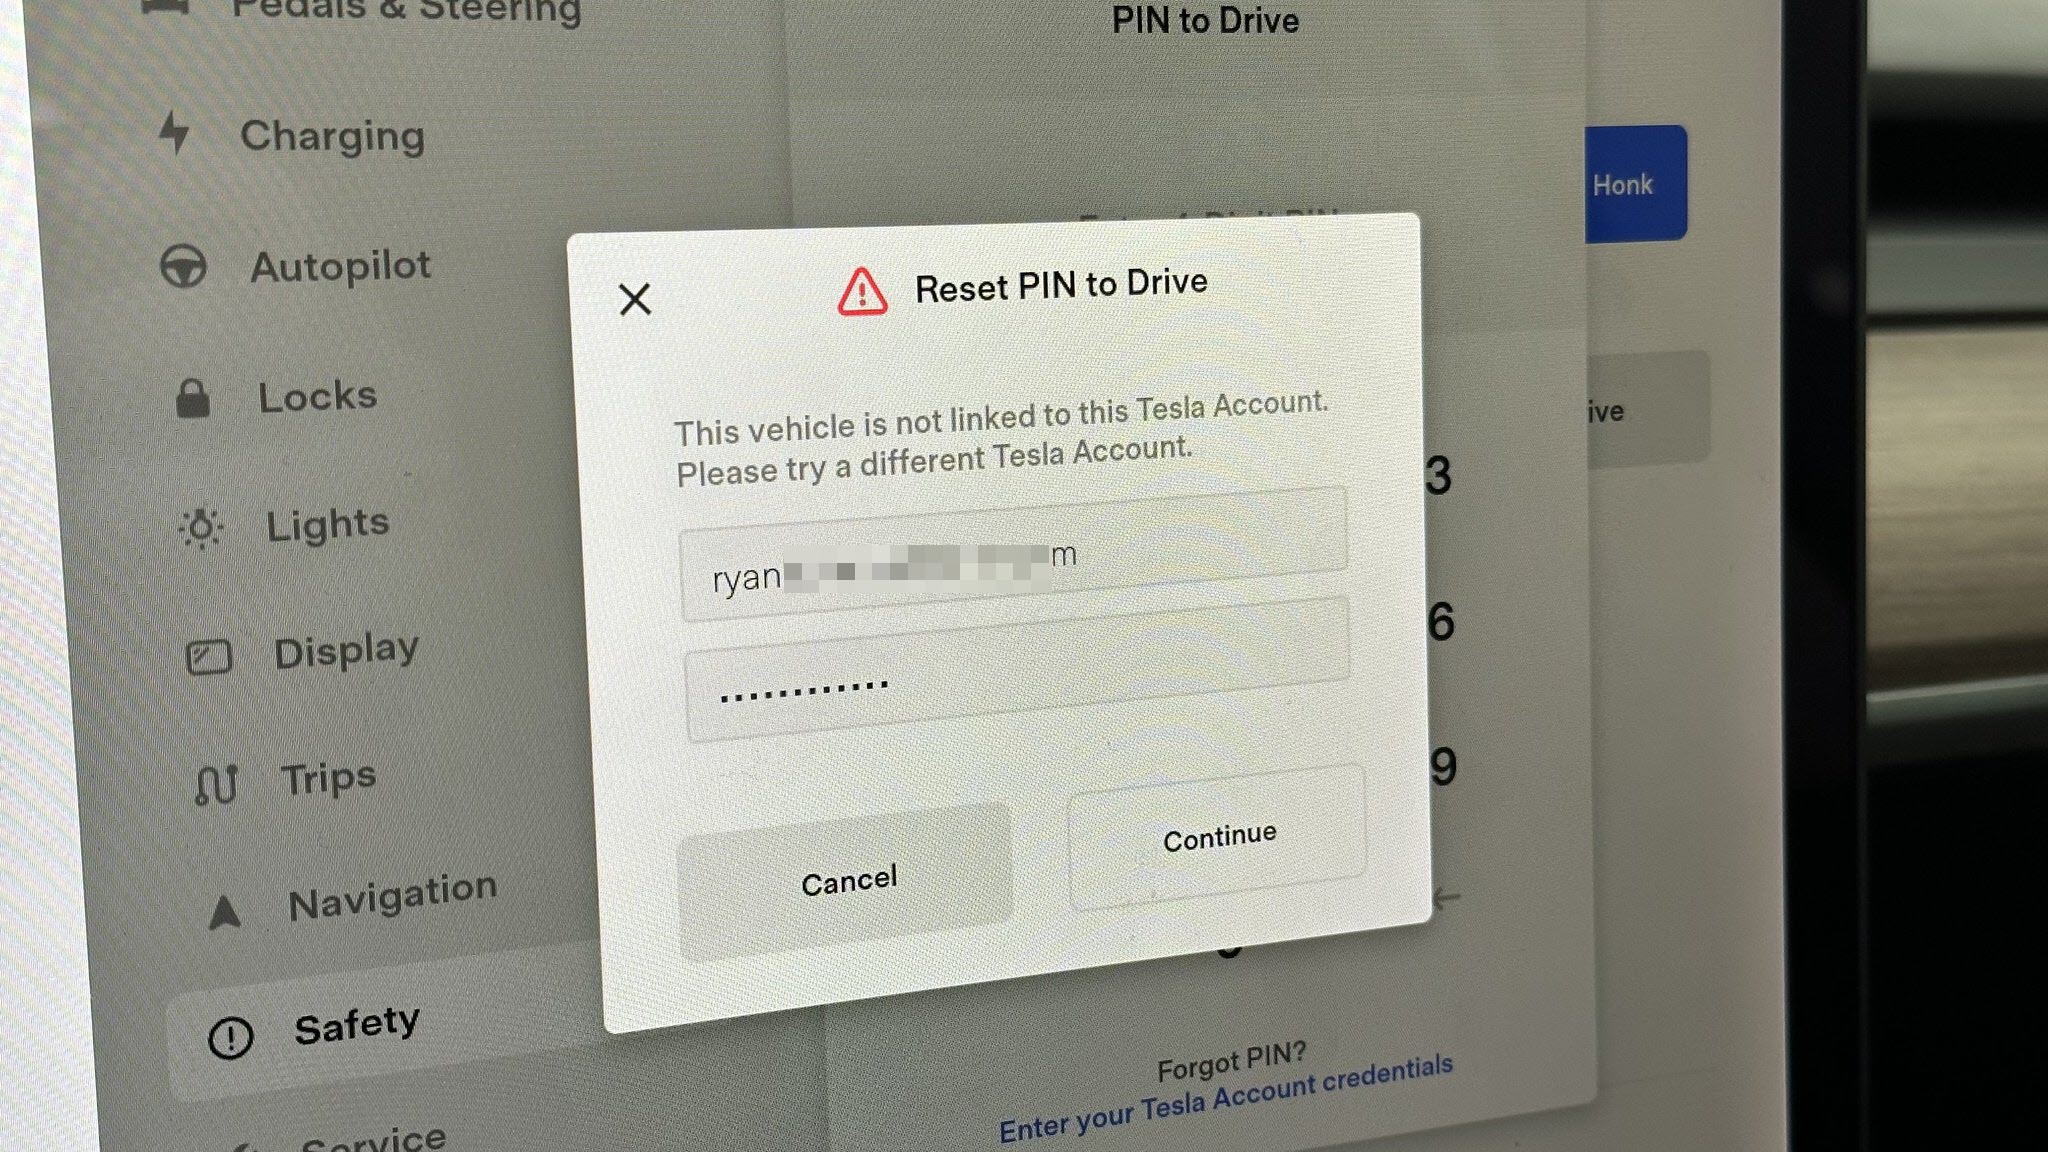 pin to drive